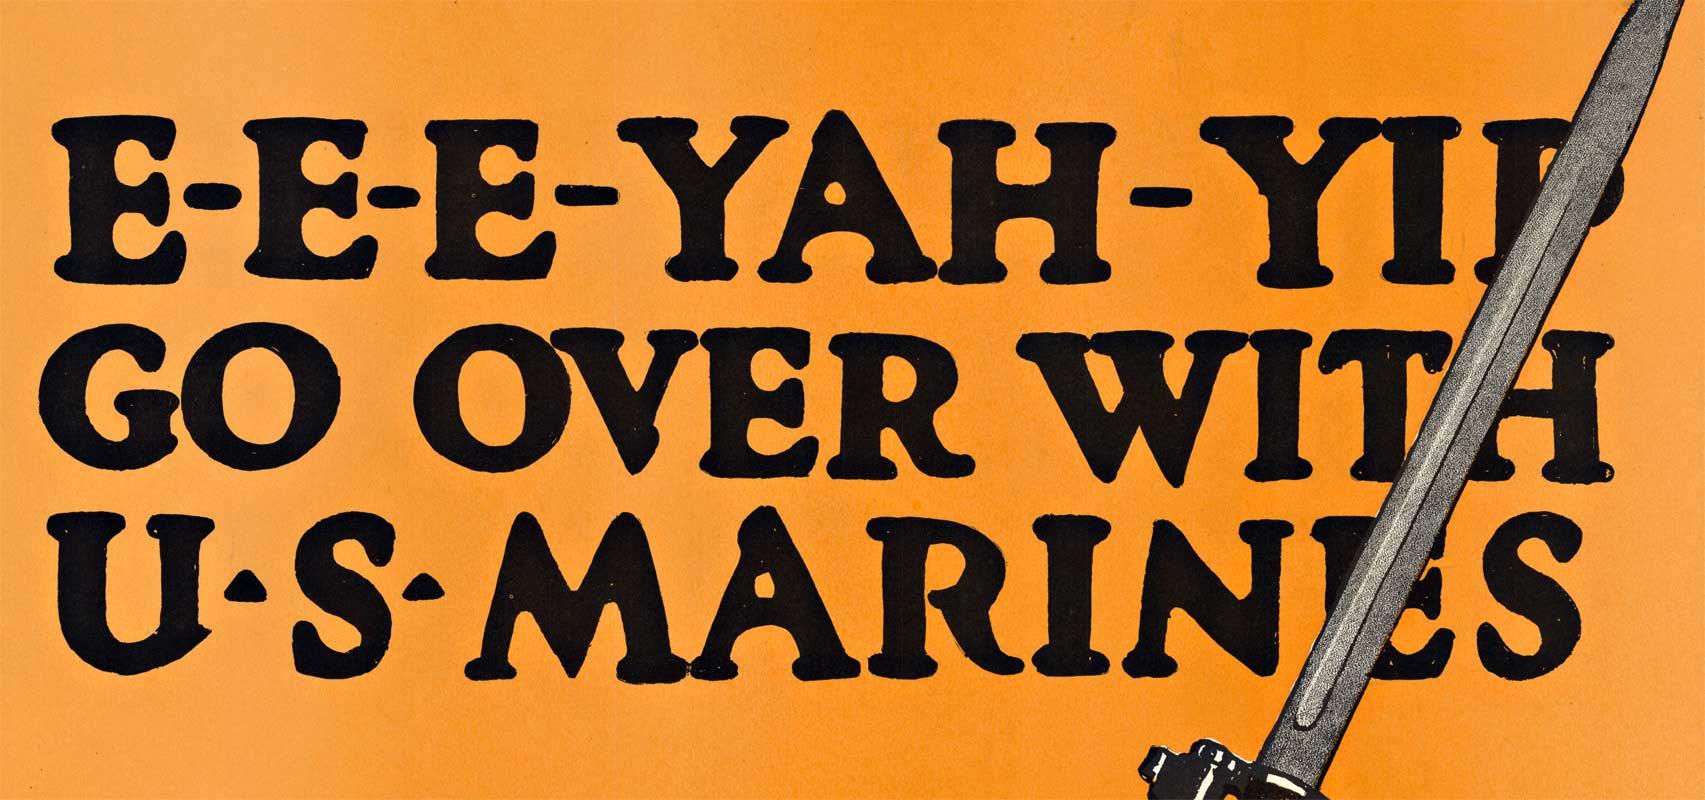 Original Marines World War 1  poster. E-E-E-YAH-YIP Go over with U. S. Marines - Academic Print by C B Falls